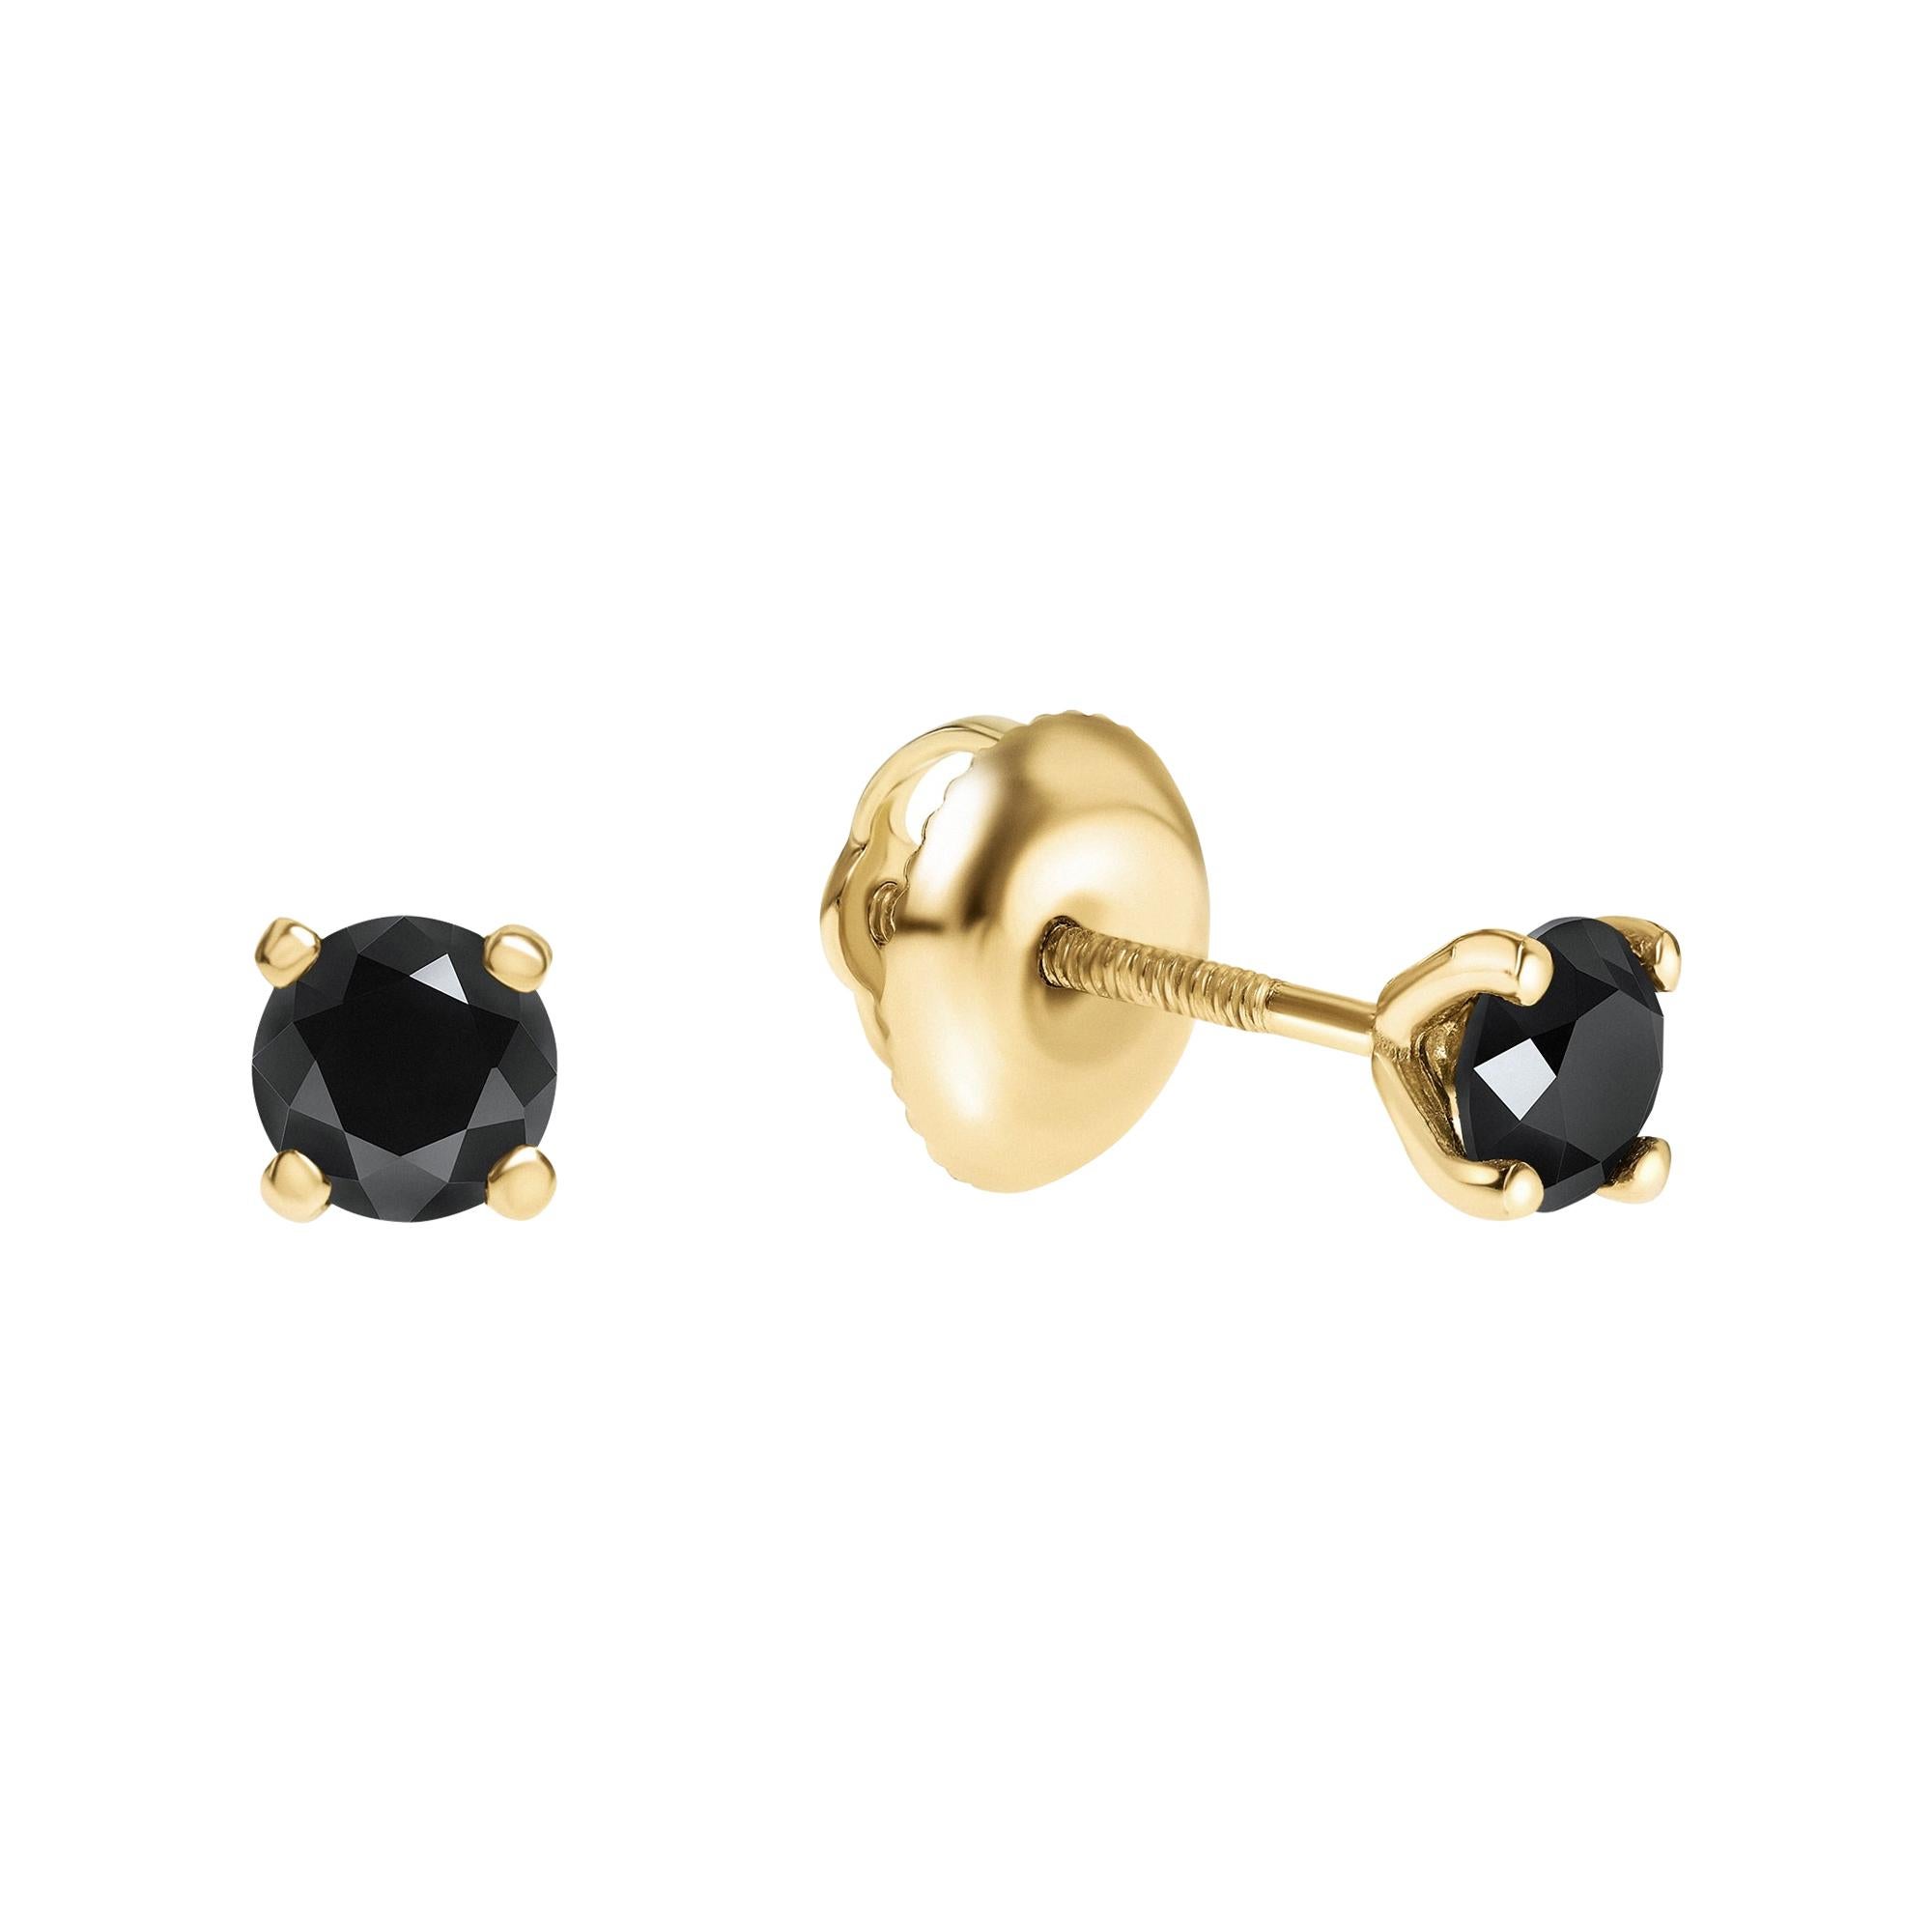 0.50 Carat Black Diamond Stud Earrings in 14 Karat Yellow Gold - Shlomit Rogel